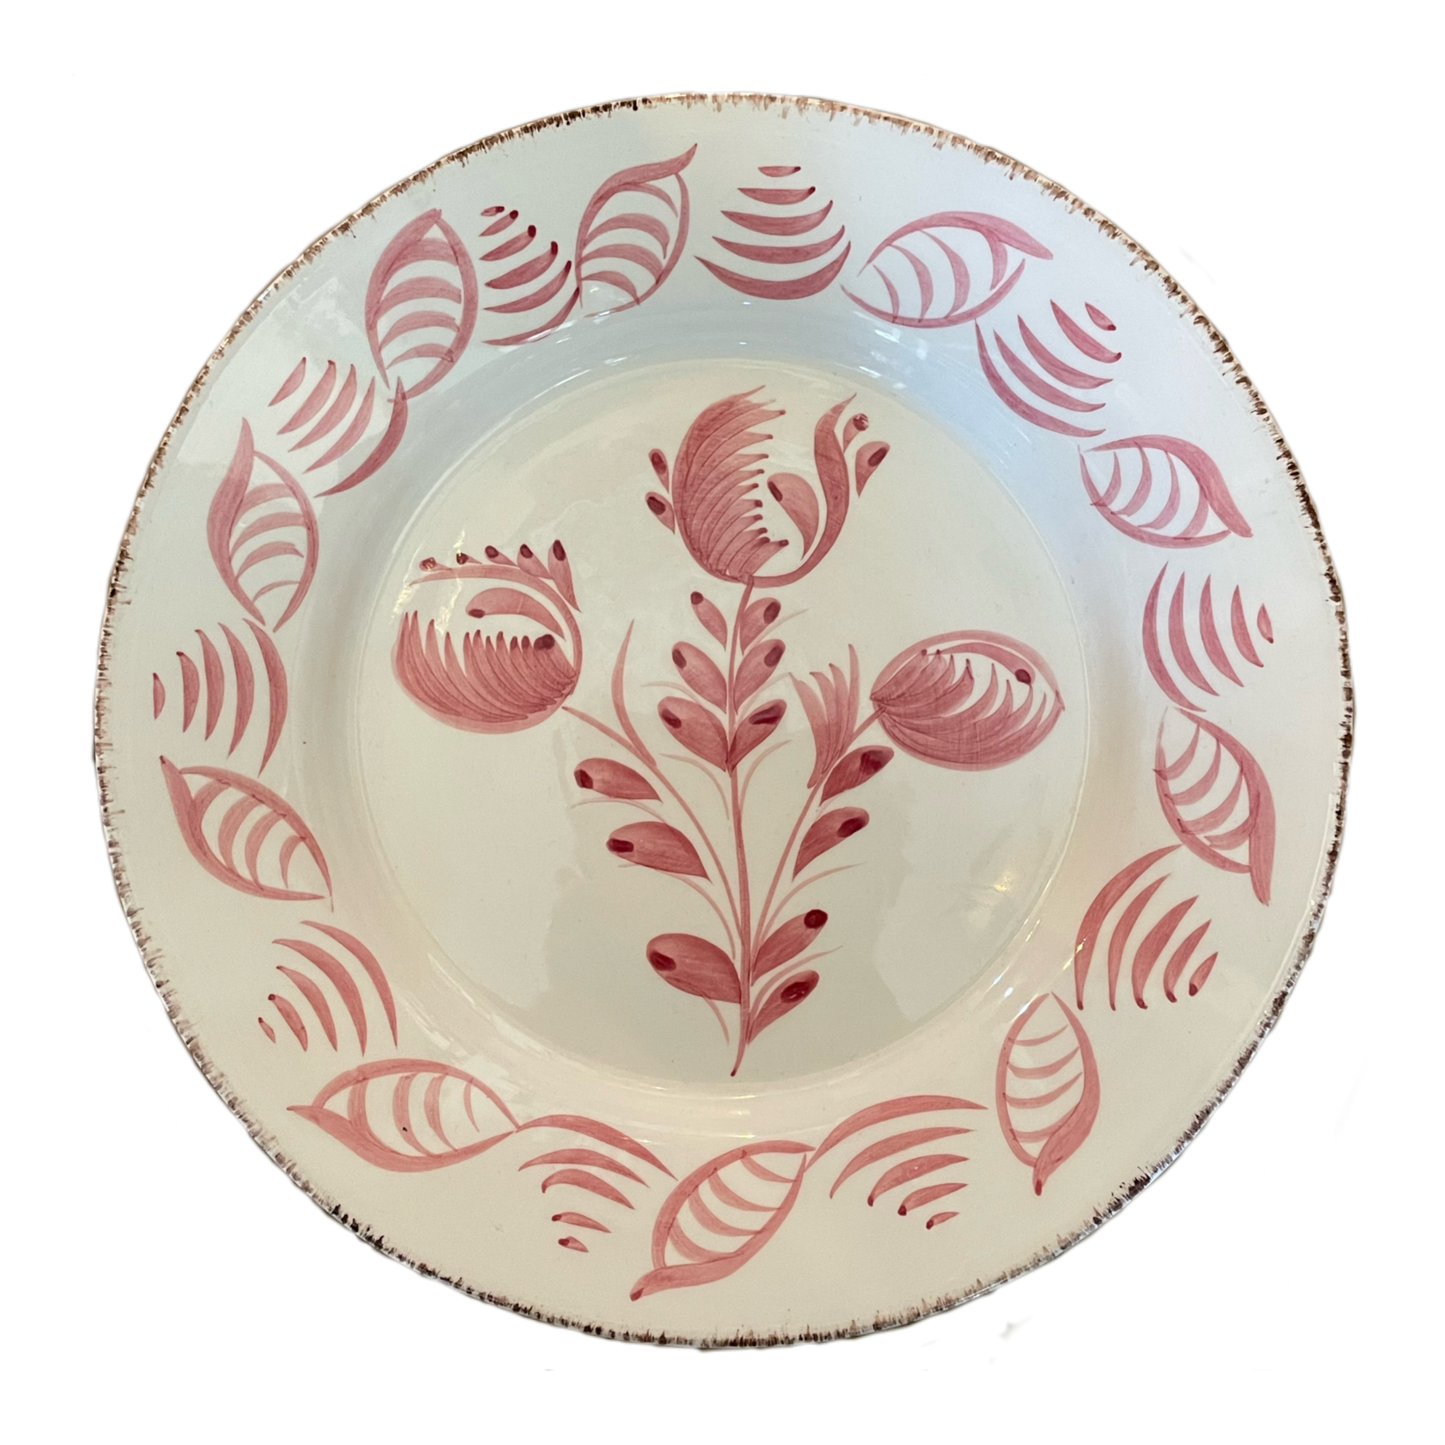 Ceramic Painted Dinner Plate